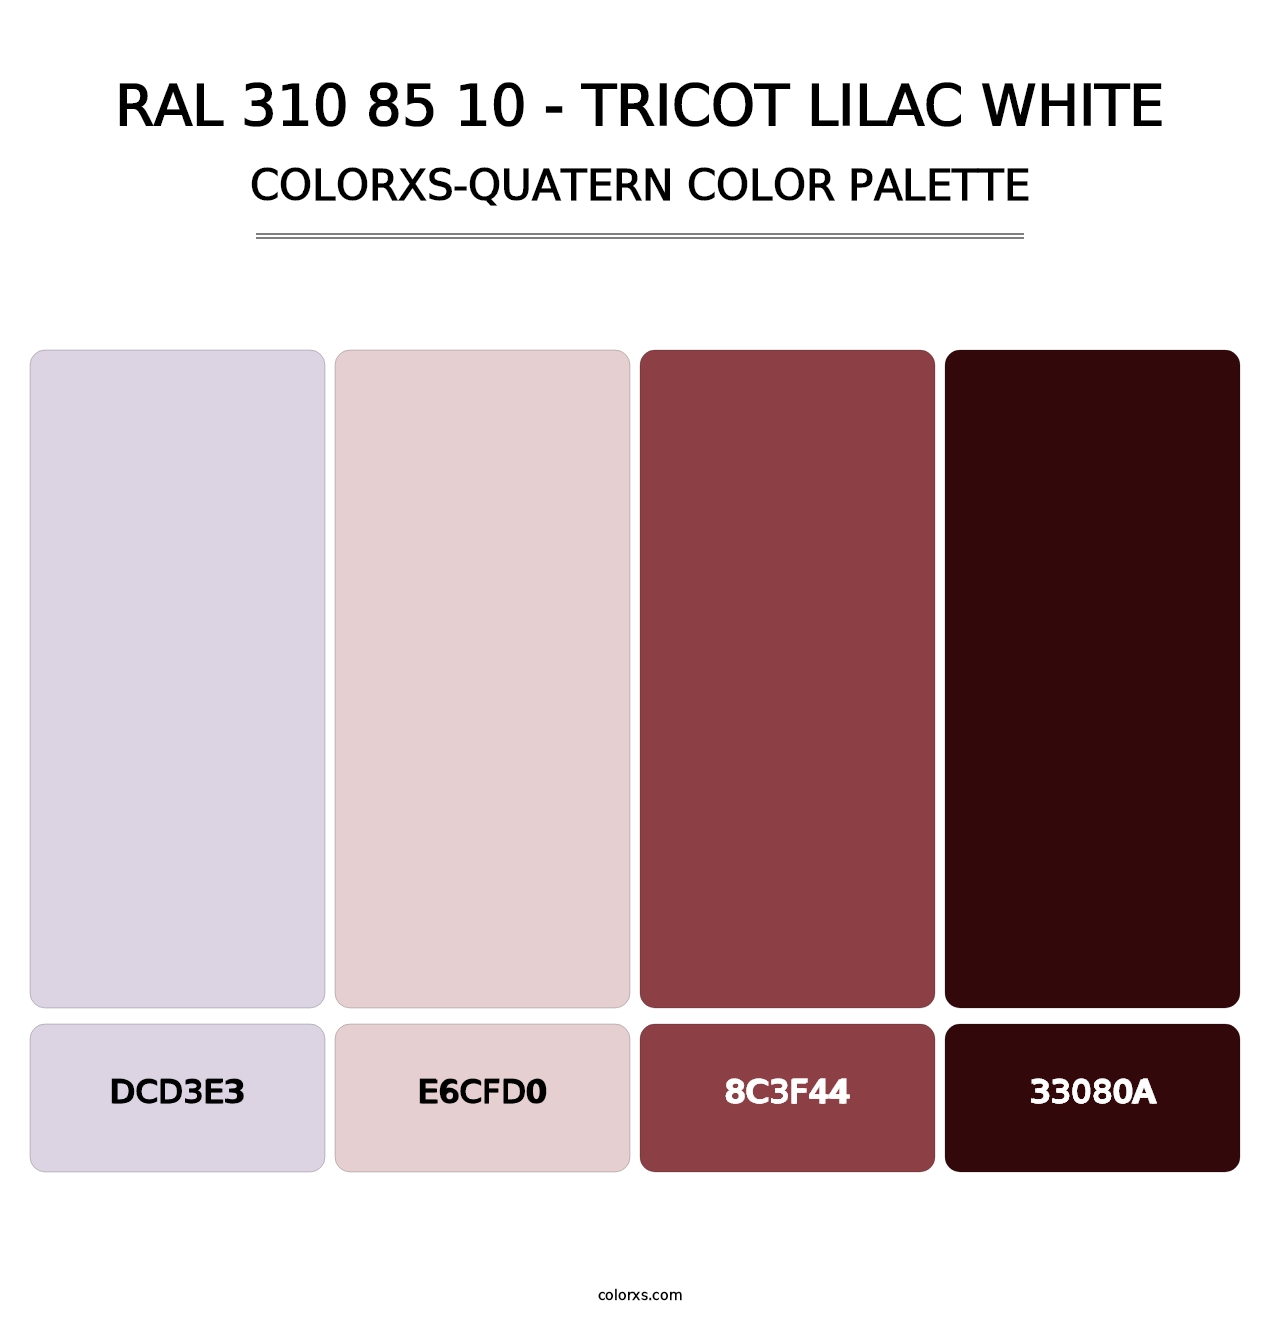 RAL 310 85 10 - Tricot Lilac White - Colorxs Quatern Palette